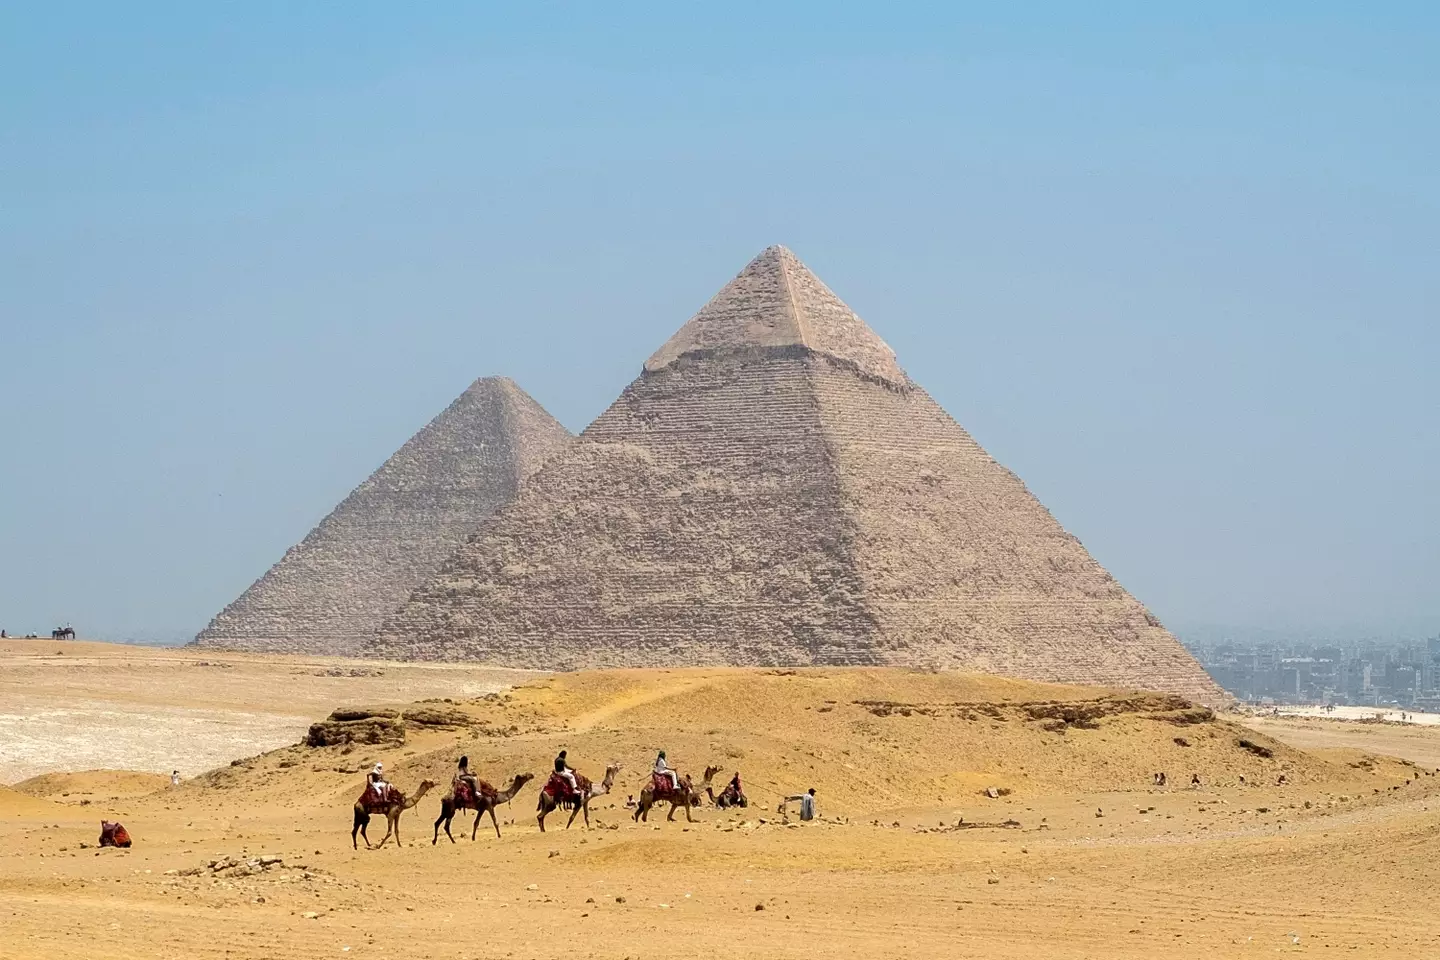 The pyramids remain a popular tourist destination. (JEWEL SAMAD/AFP via Getty Images)